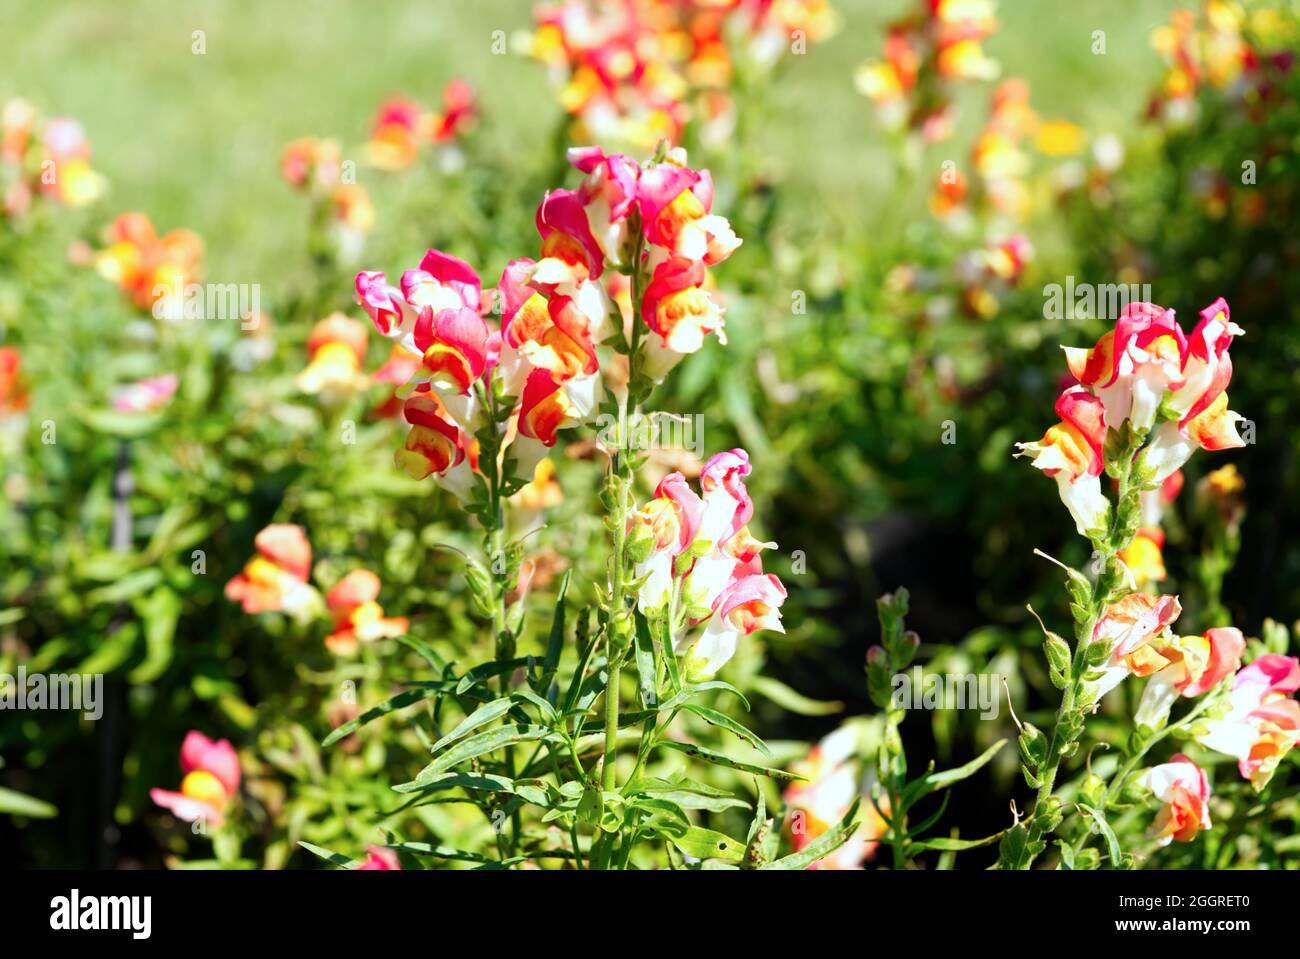 Snap dragon or Antirrhinum majus flowers blooming in garden Stock Photo